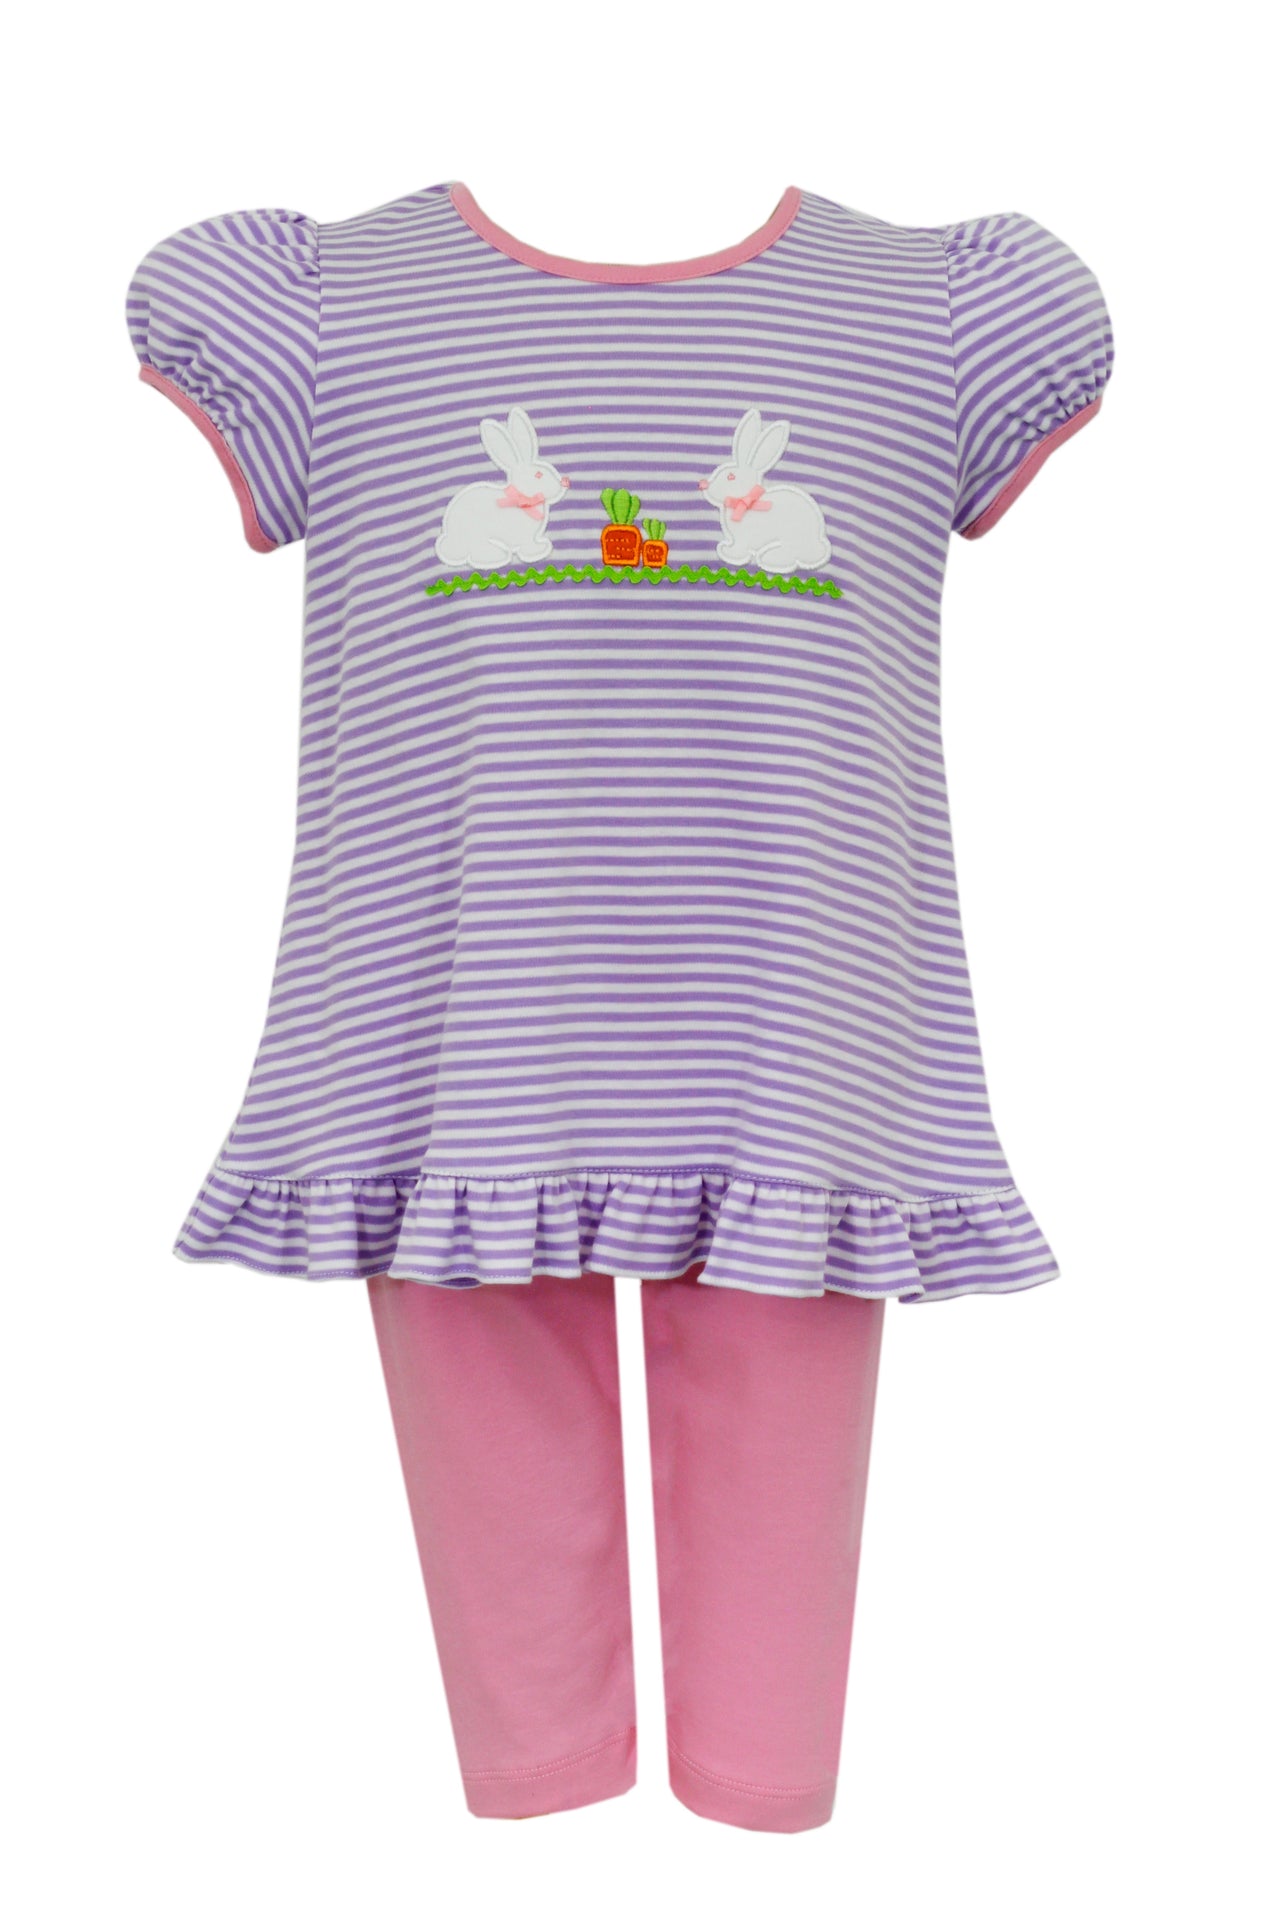 Claire & Charlie Bunny W/Carrot Lilac Stripe Knit Tunic Set W/Leggings 5001N-CS24 5012